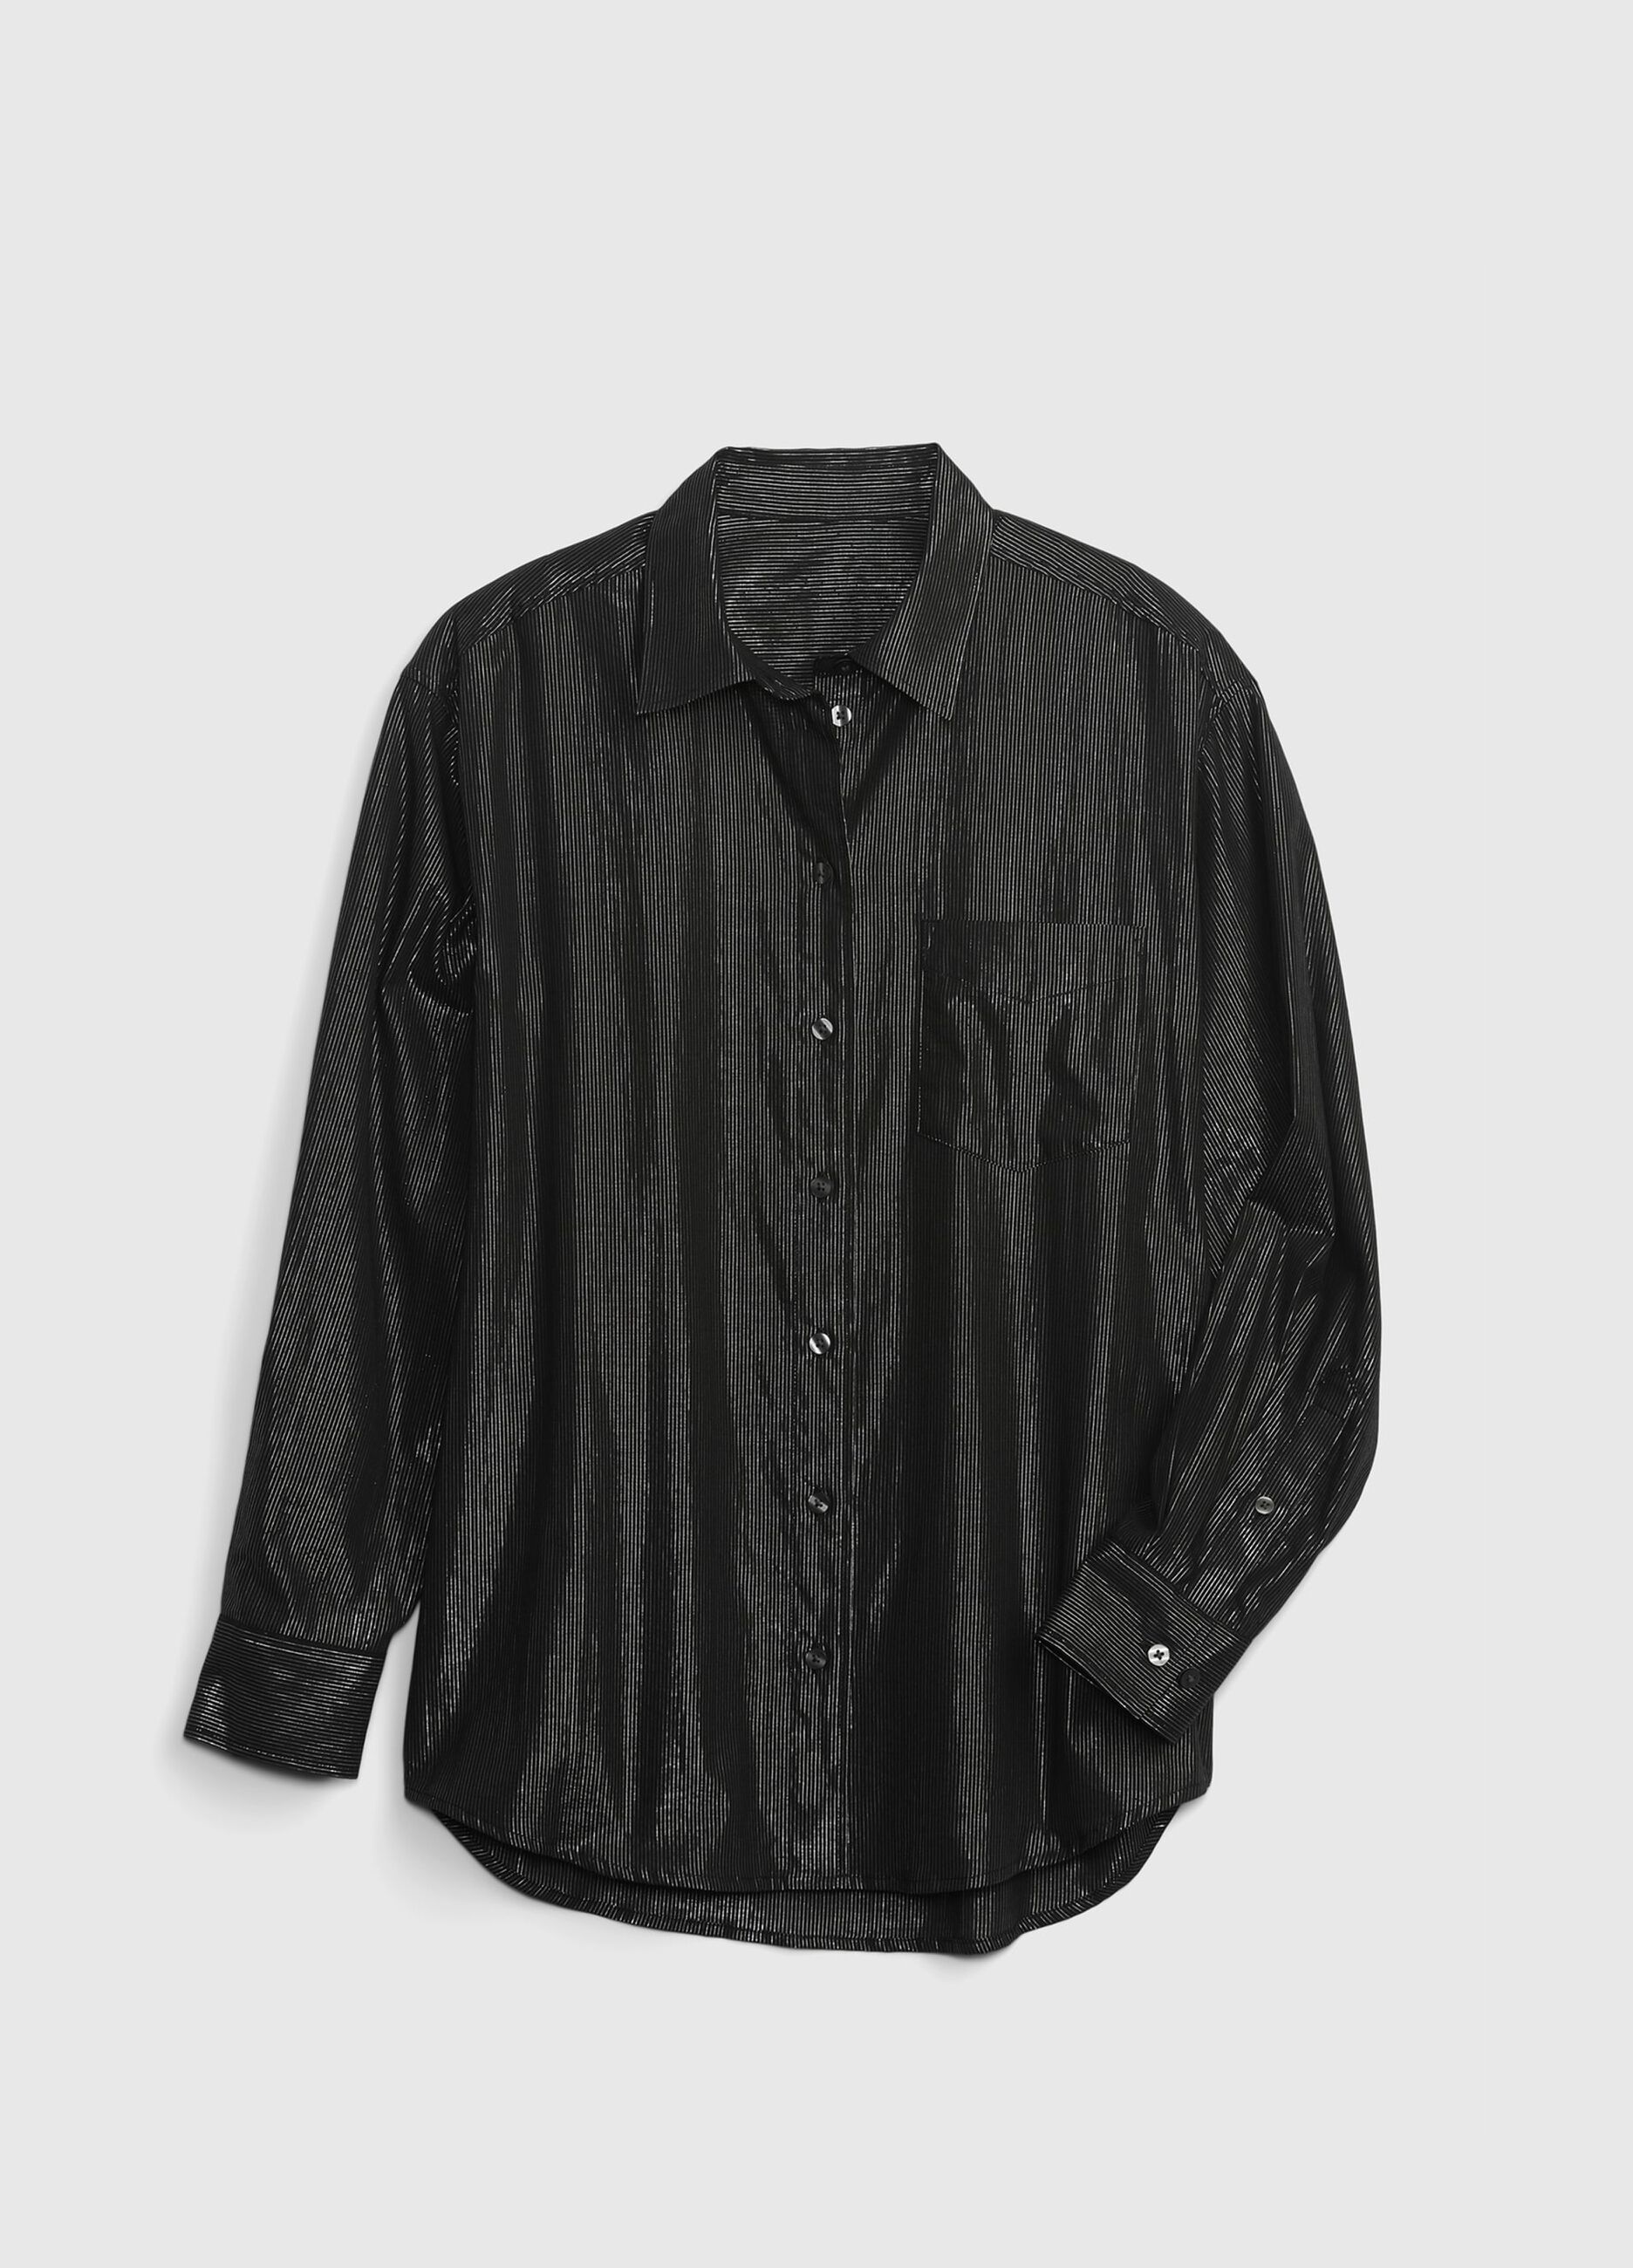 Lurex oversize shirt with pinstripe pattern_5